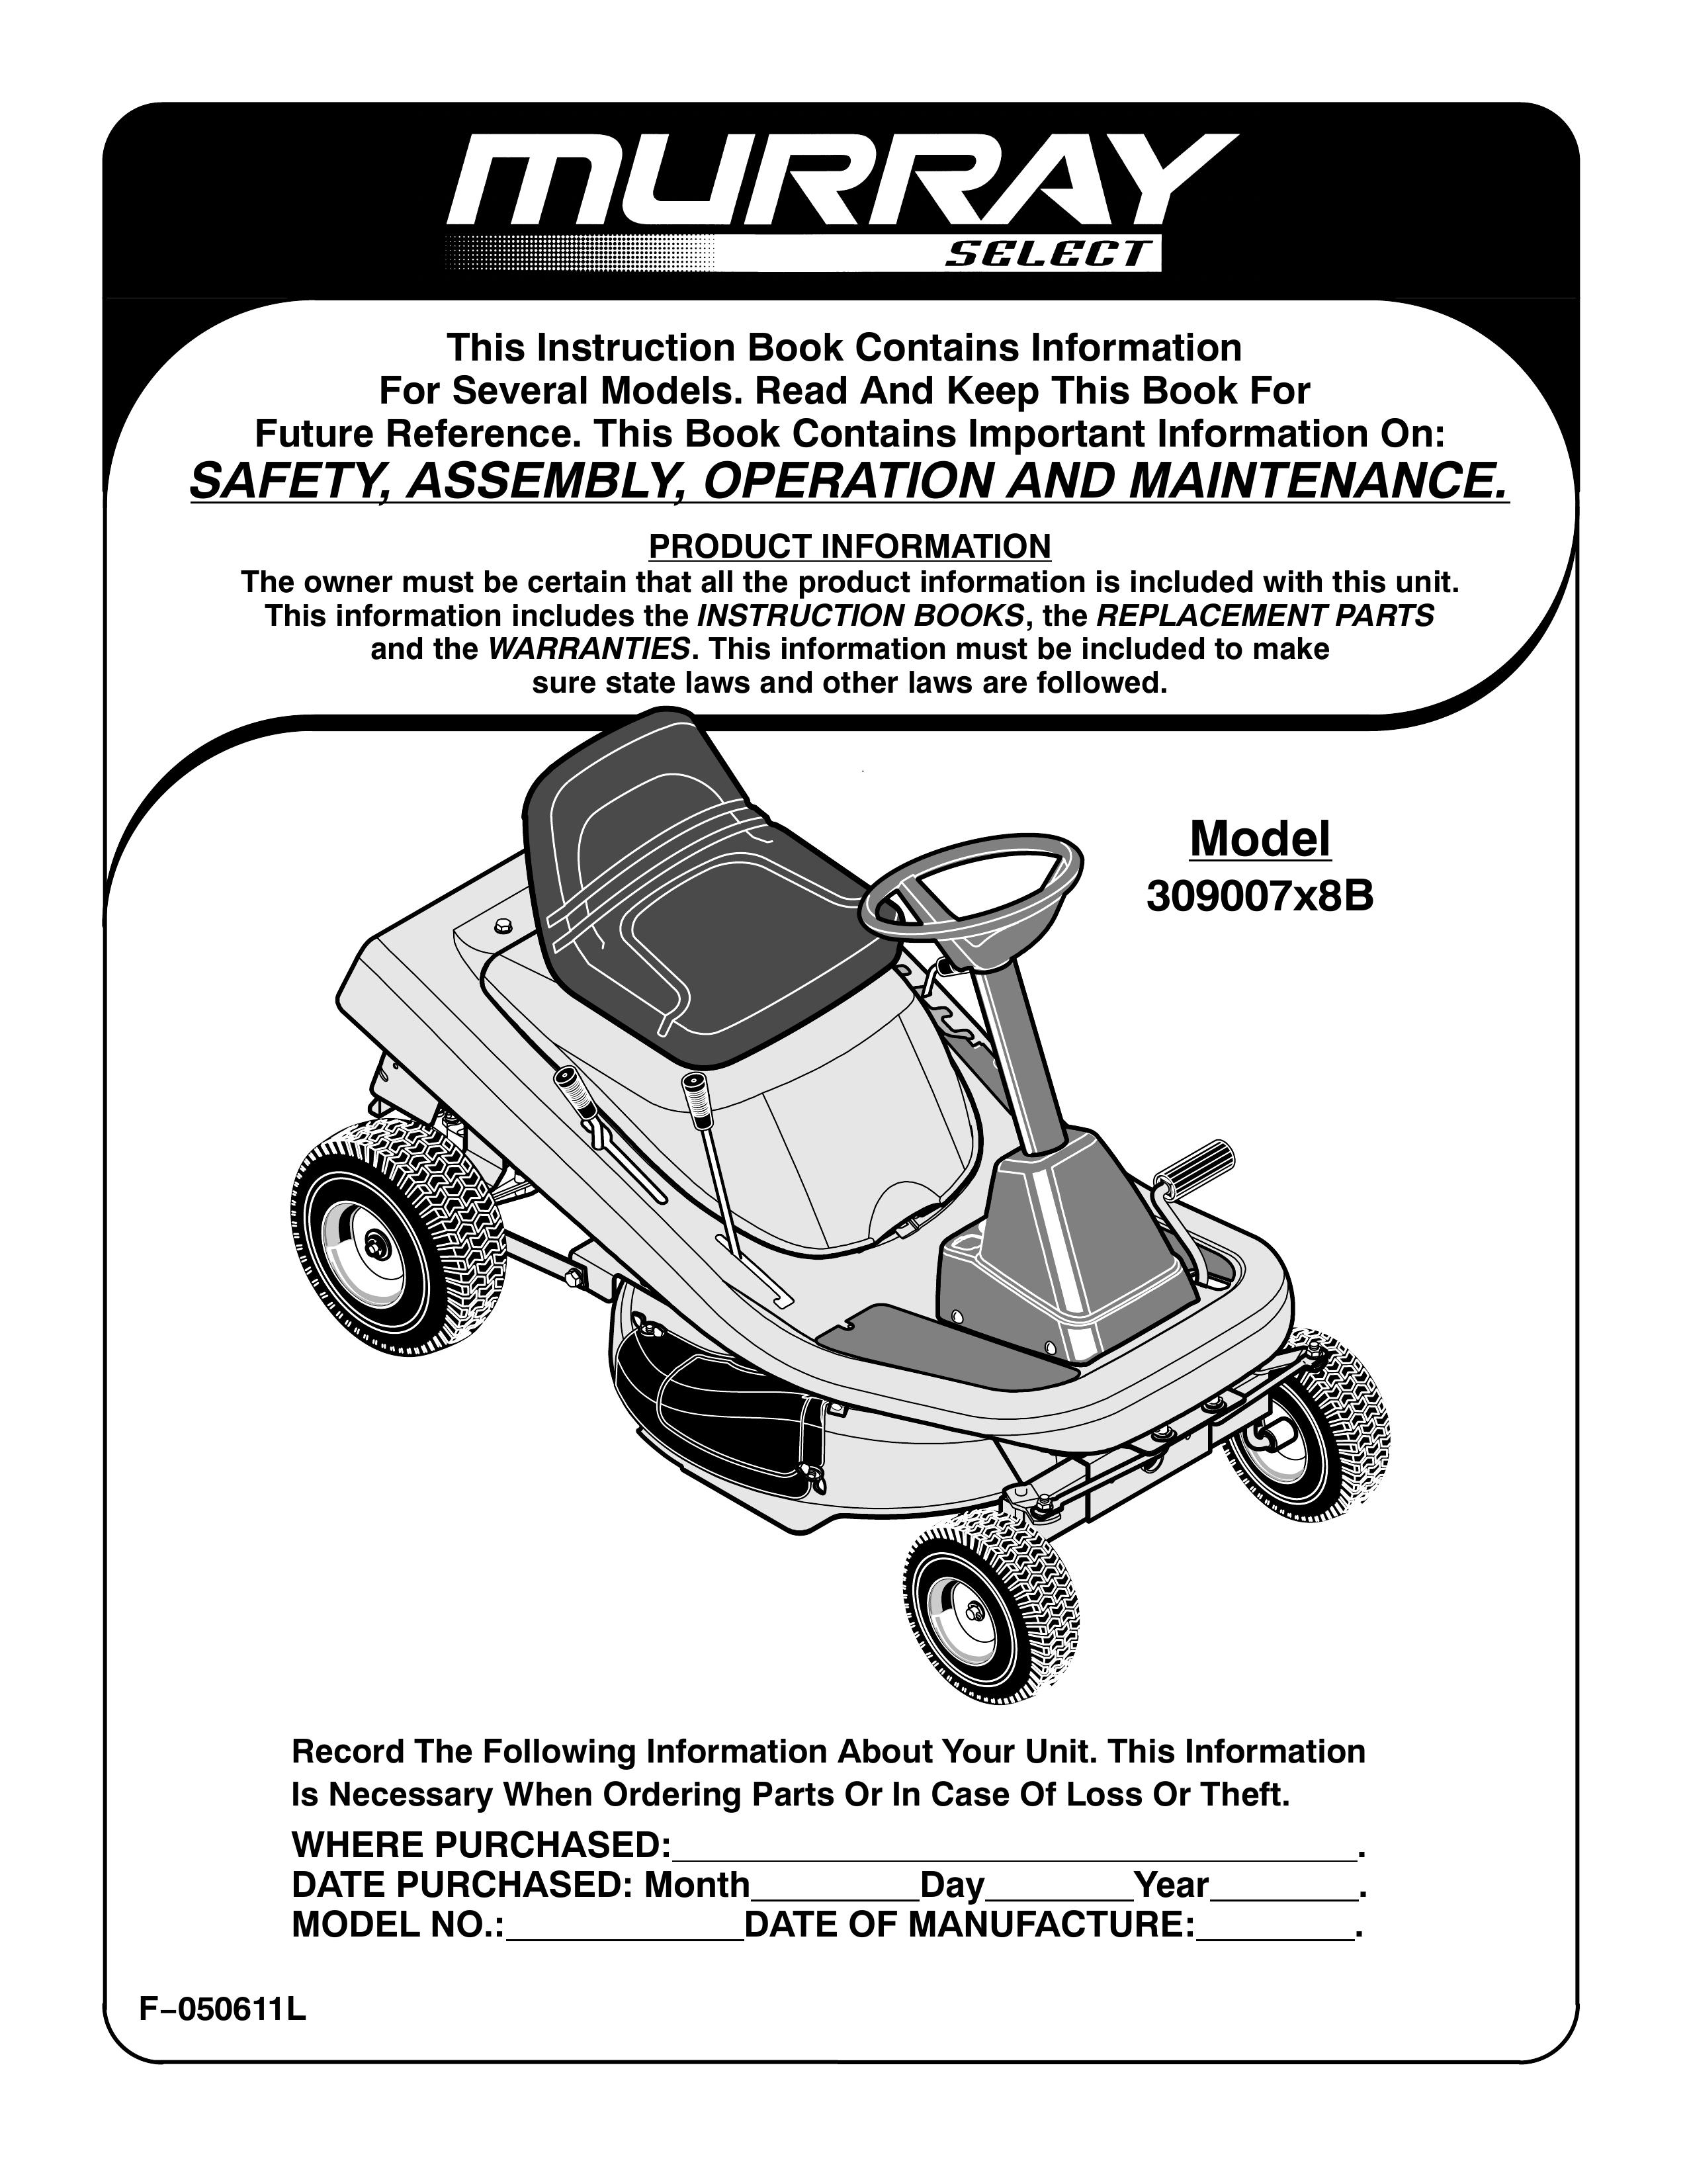 Murray 309007x8B Lawn Mower User Manual